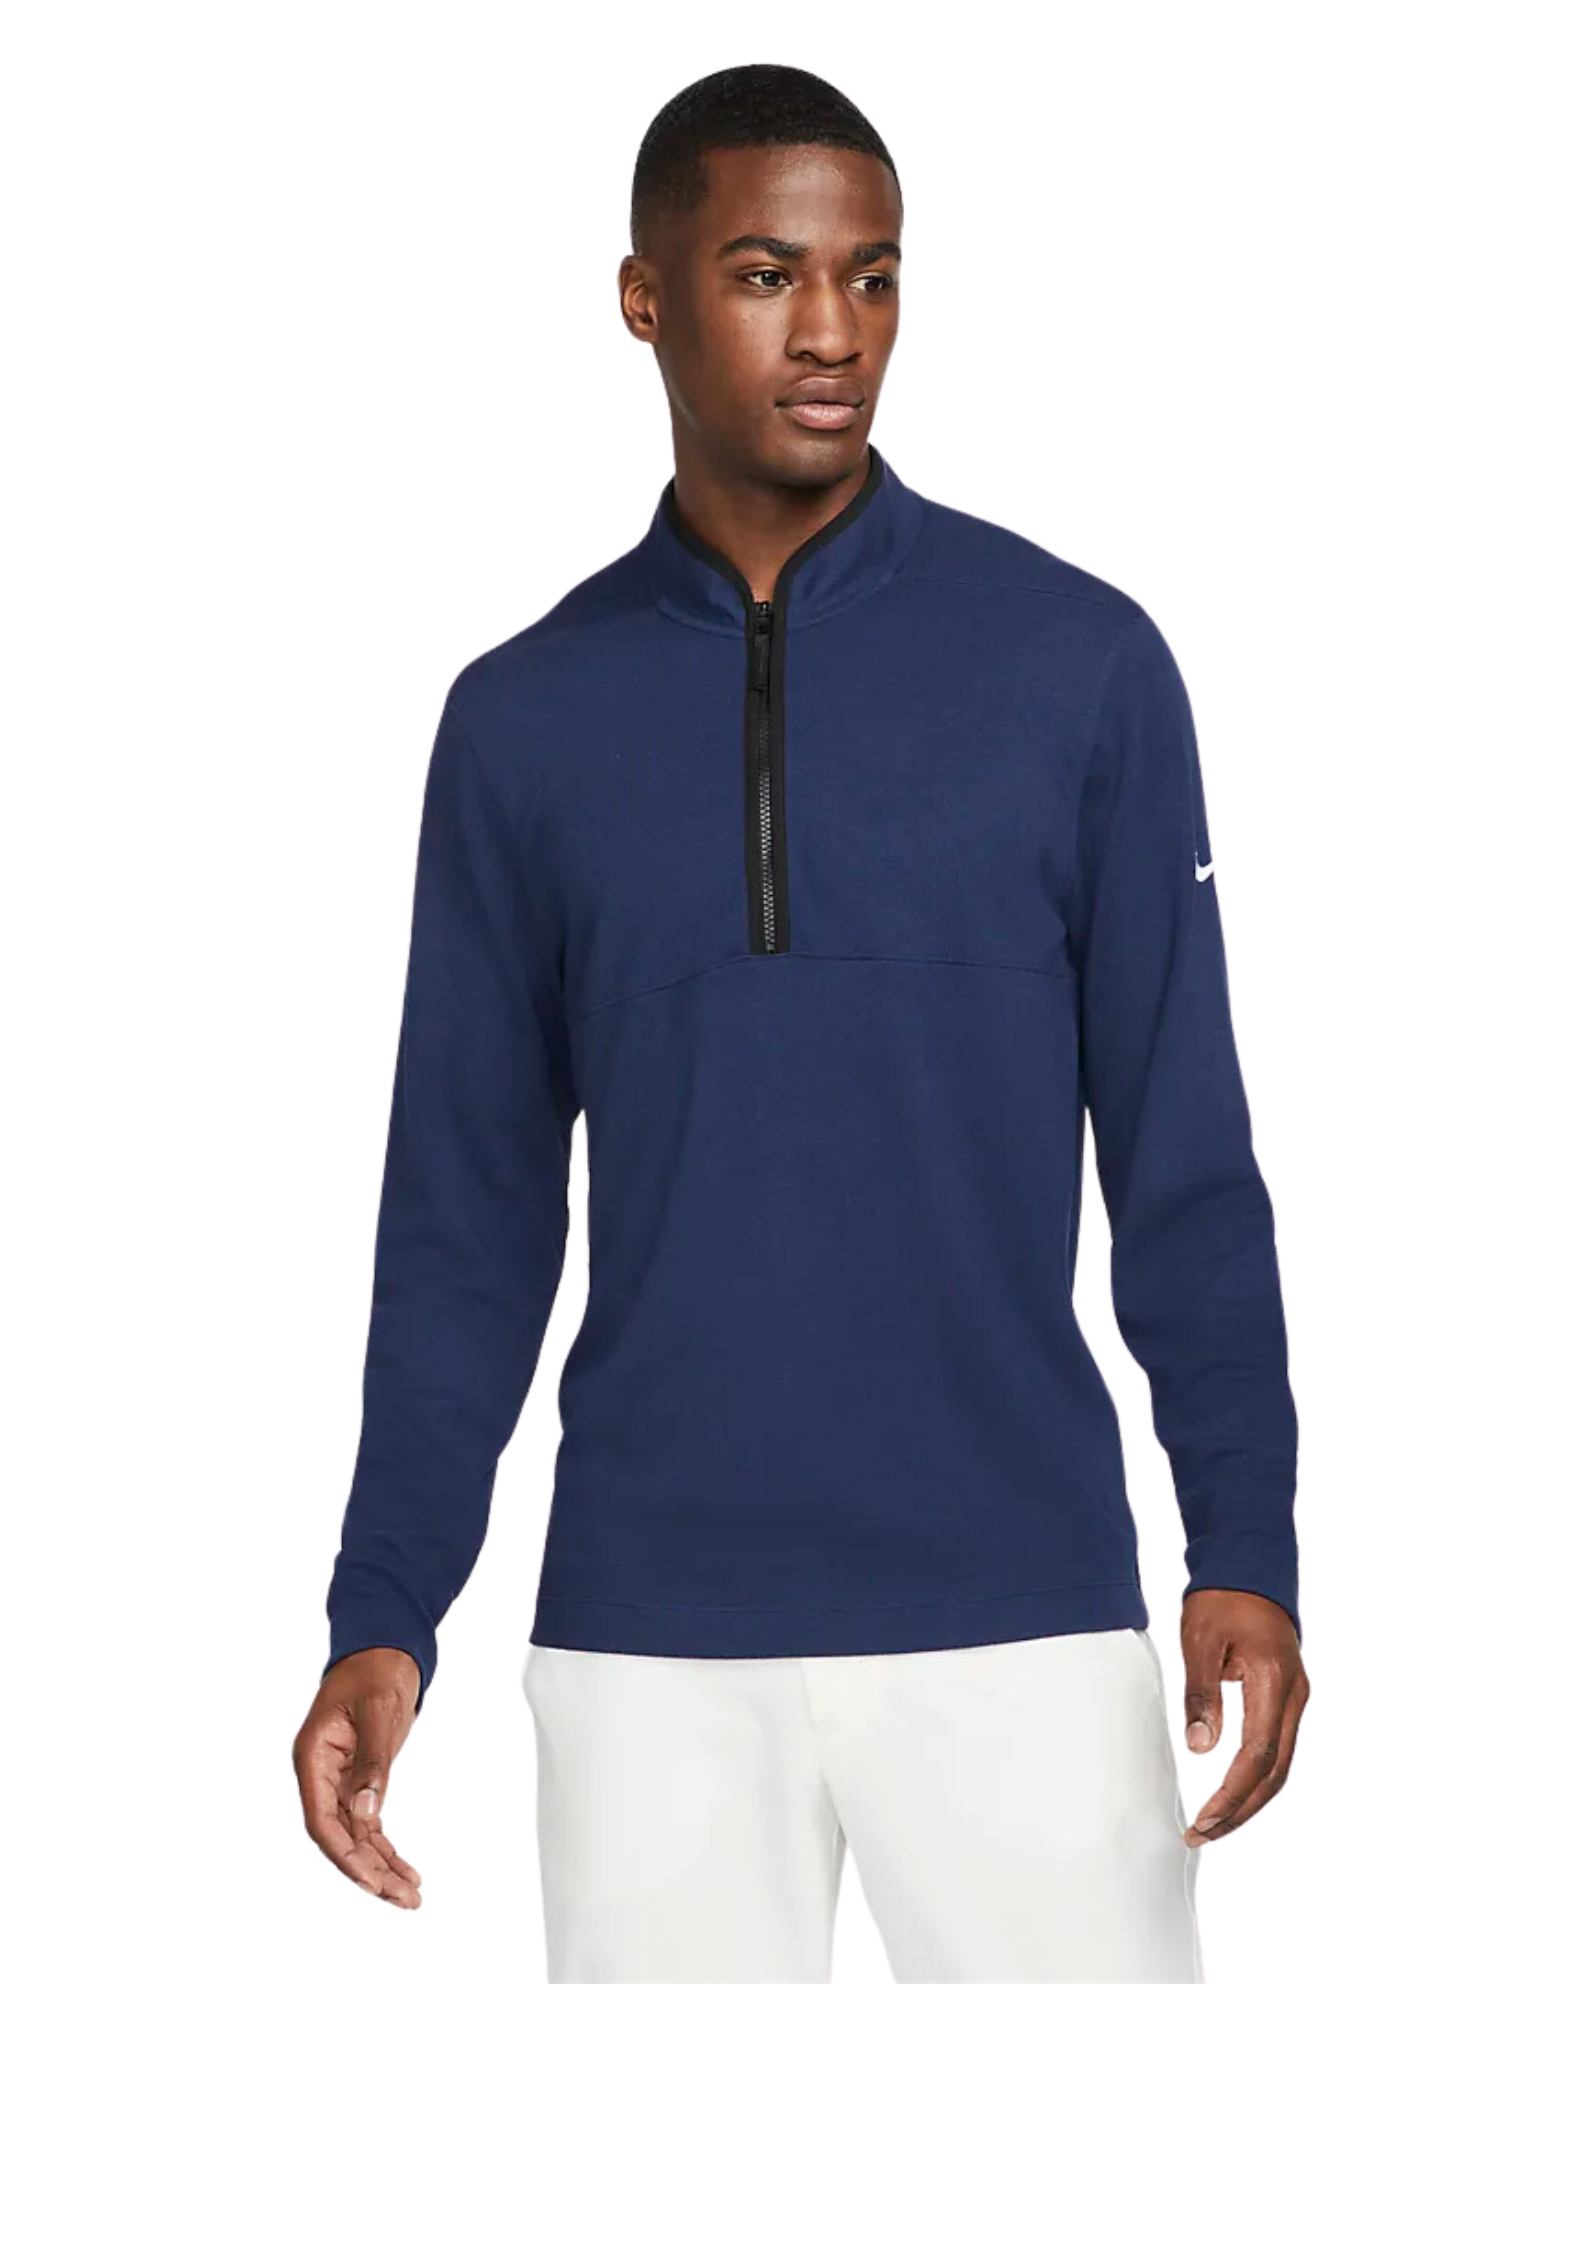 Nike | DJ5474-419 | Dri-FIT Victory Men's Half-Zip Golf Top | College Navy / Black / White